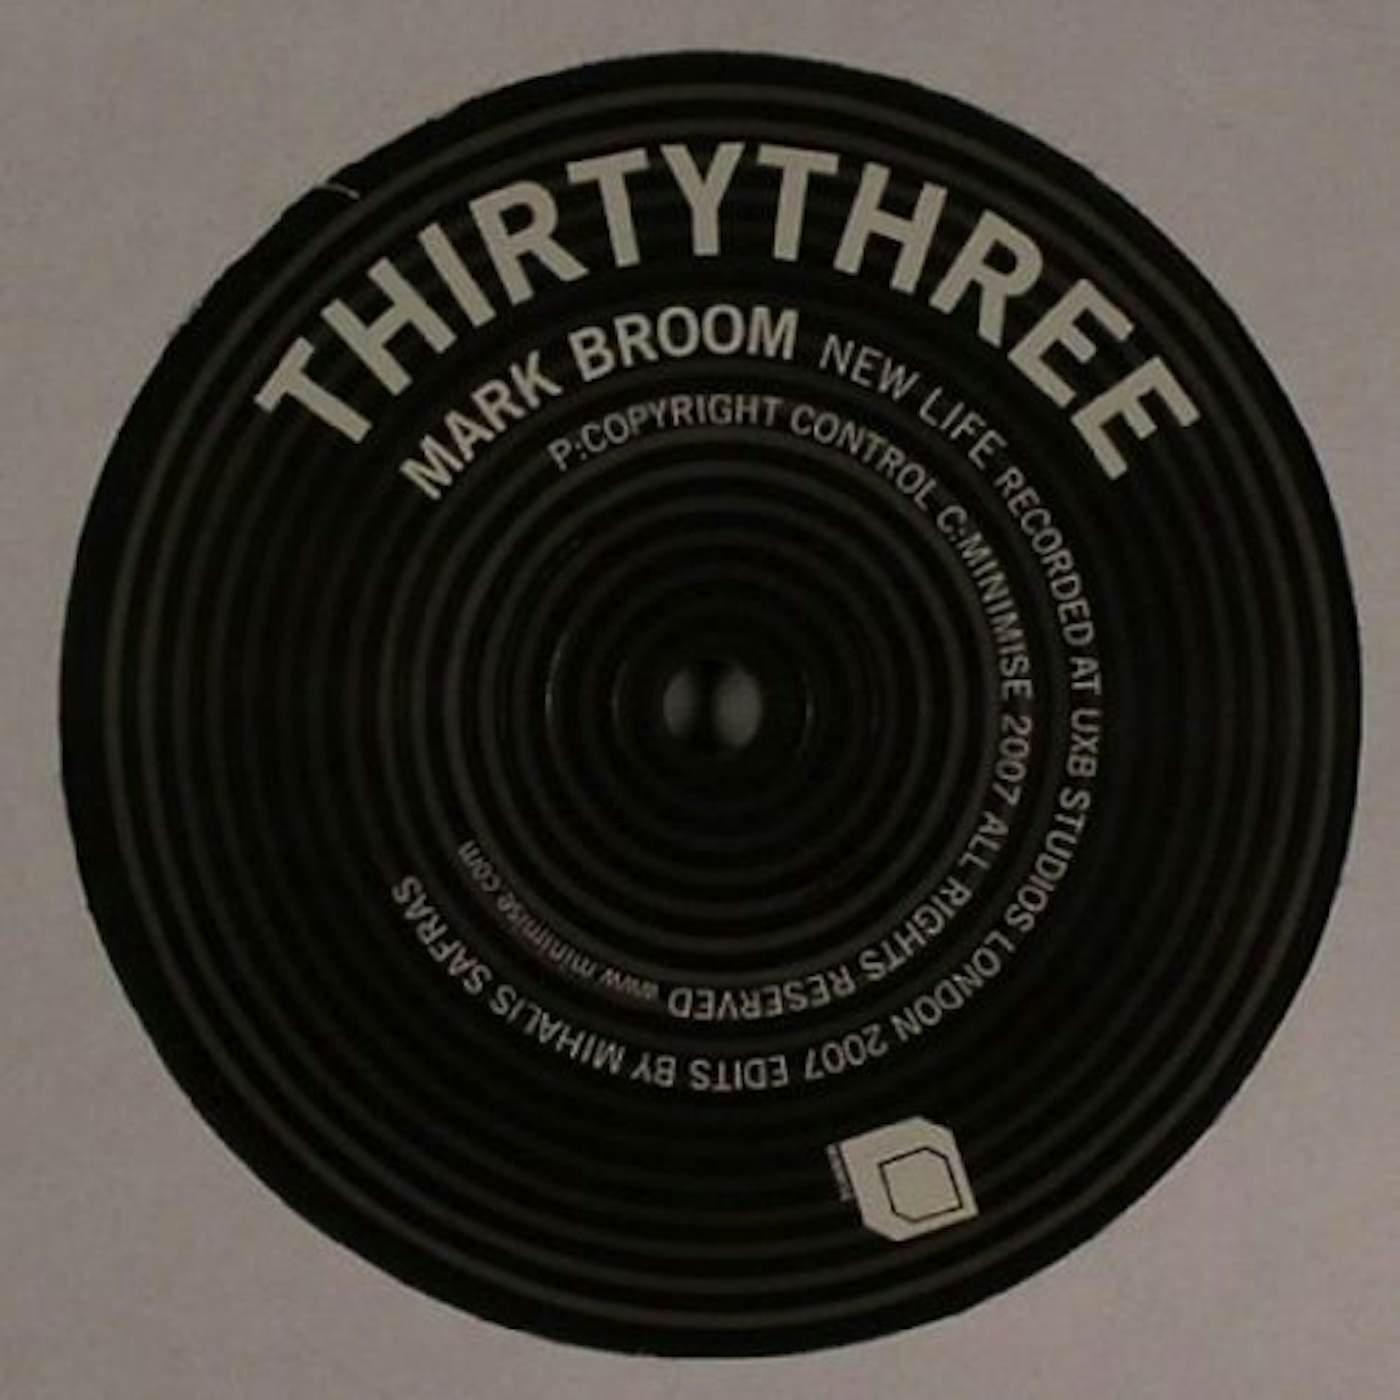 Mark Broom NEW LIFE Vinyl Record